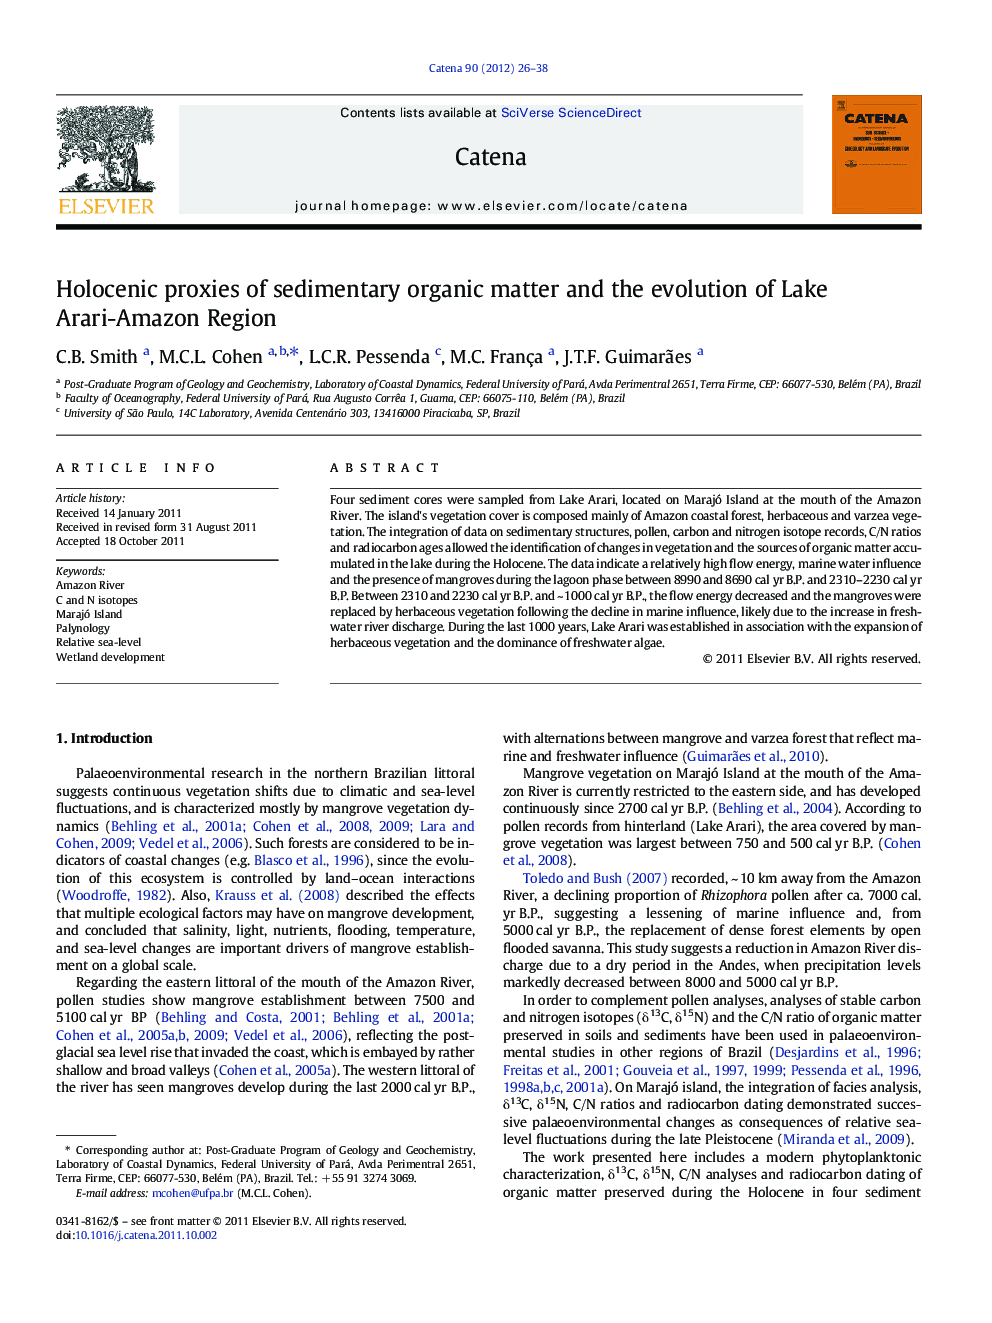 Holocenic proxies of sedimentary organic matter and the evolution of Lake Arari-Amazon Region